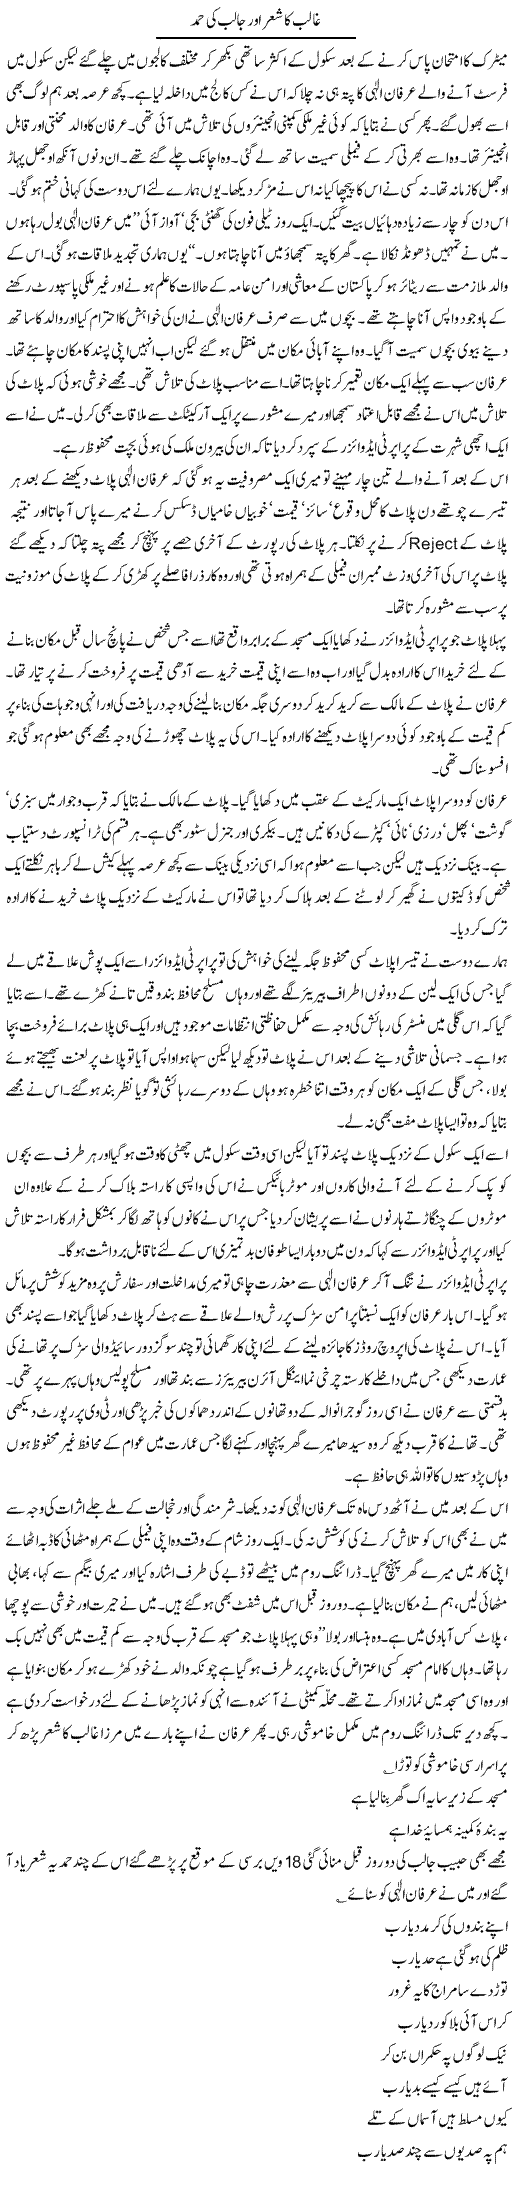 Ghalib and Jalib Express Column Hameed Ahmed 16 March 2011